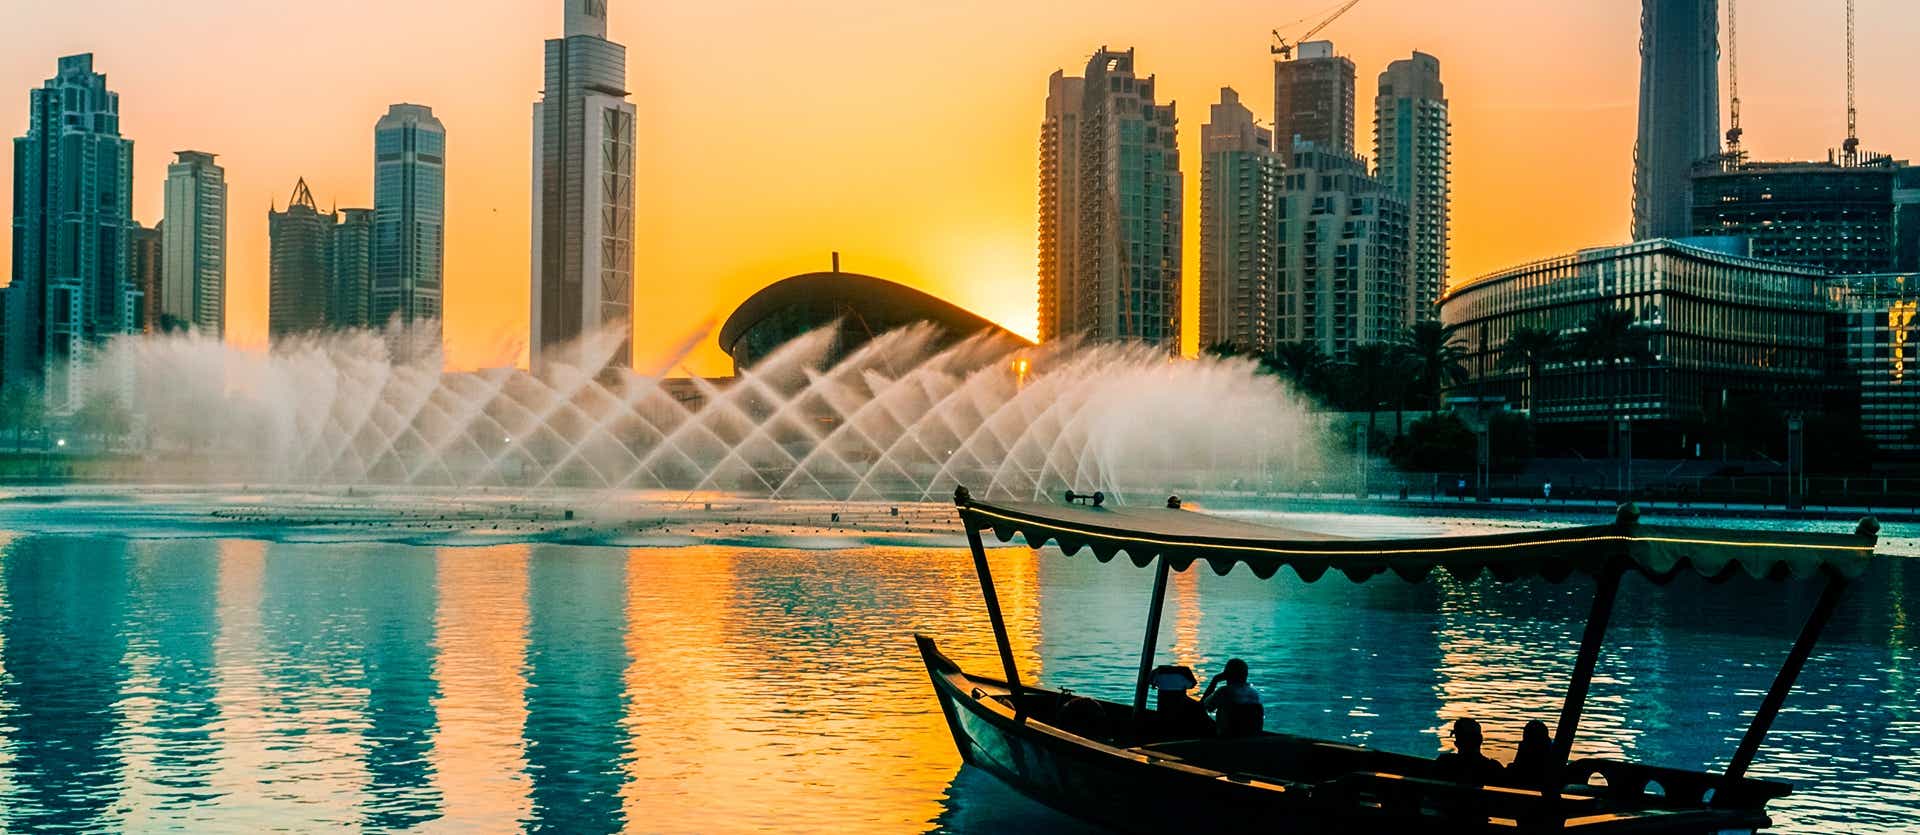 Dubai Marina <span class="iconos separador"></span> United Arab Emirates